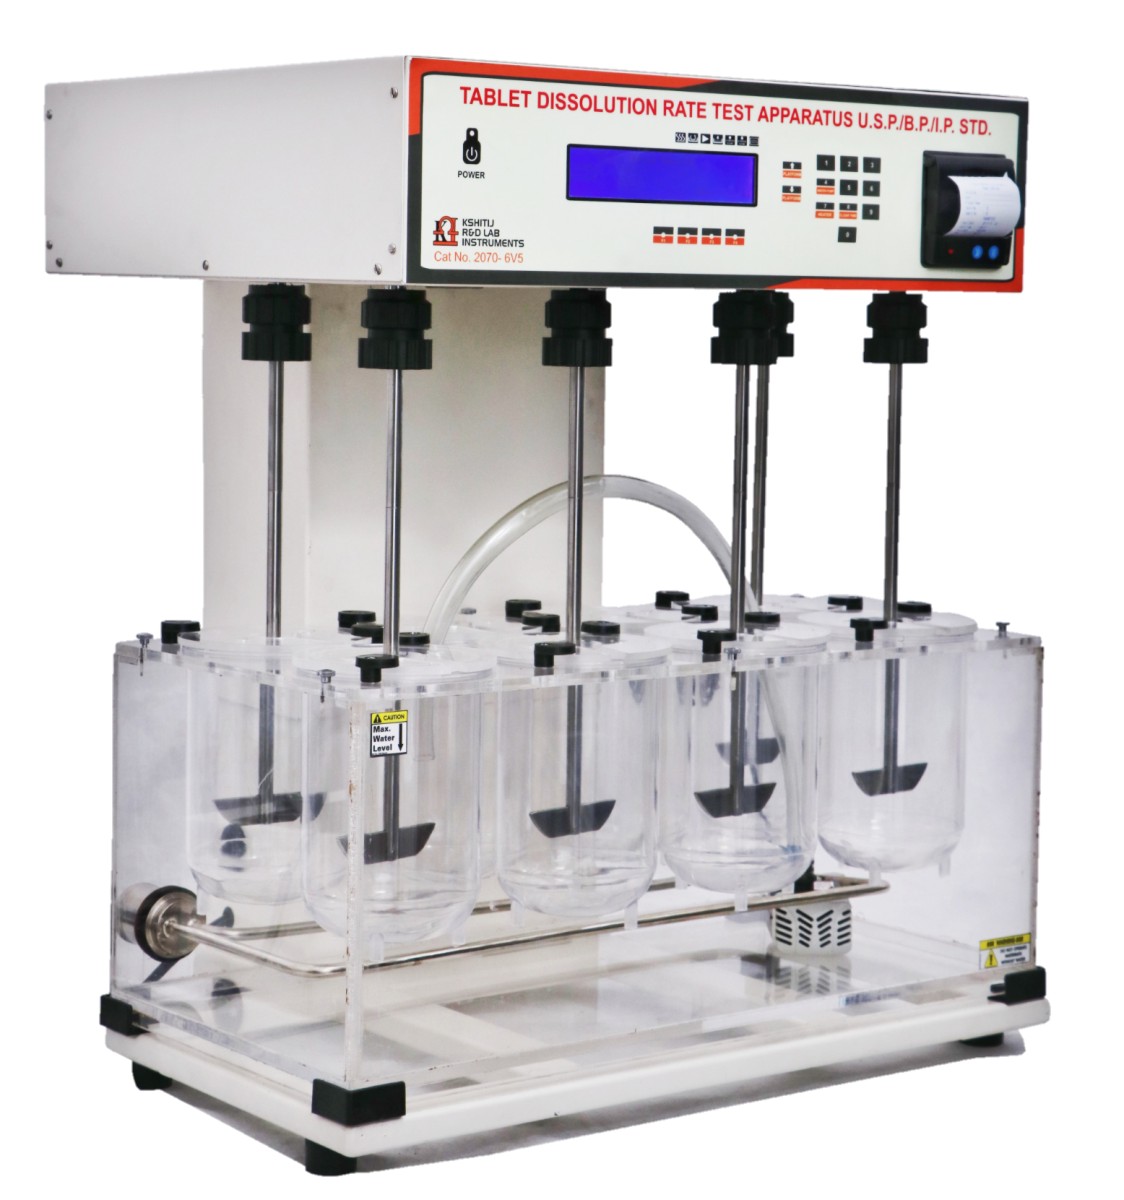  Dissolution Rate Test Apparatus, Model No.: KI- 2070